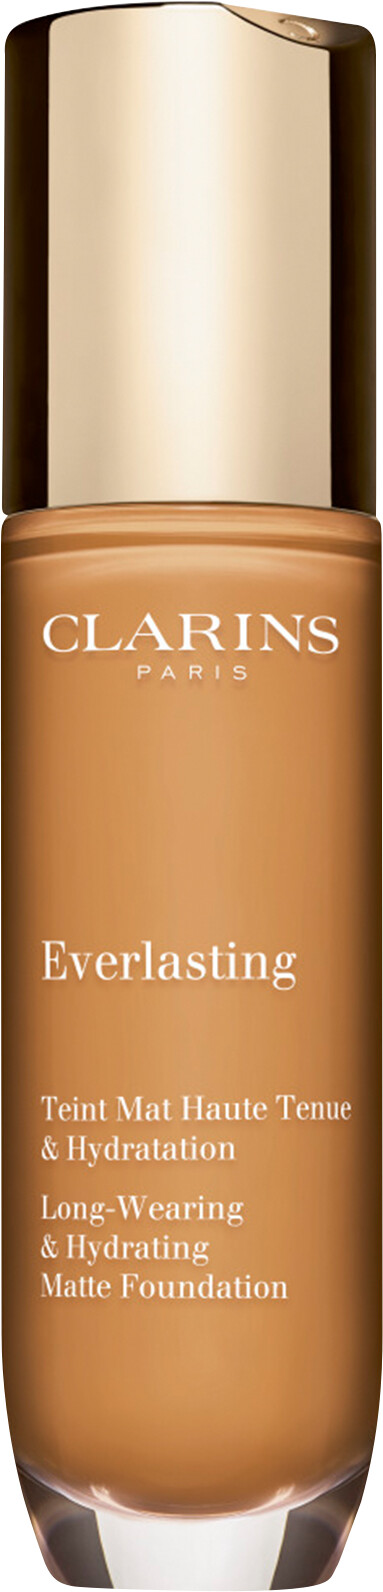 Clarins Everlasting Long-Wearing & Hydrating Matte Foundation 30ml 116.5W - Coffee